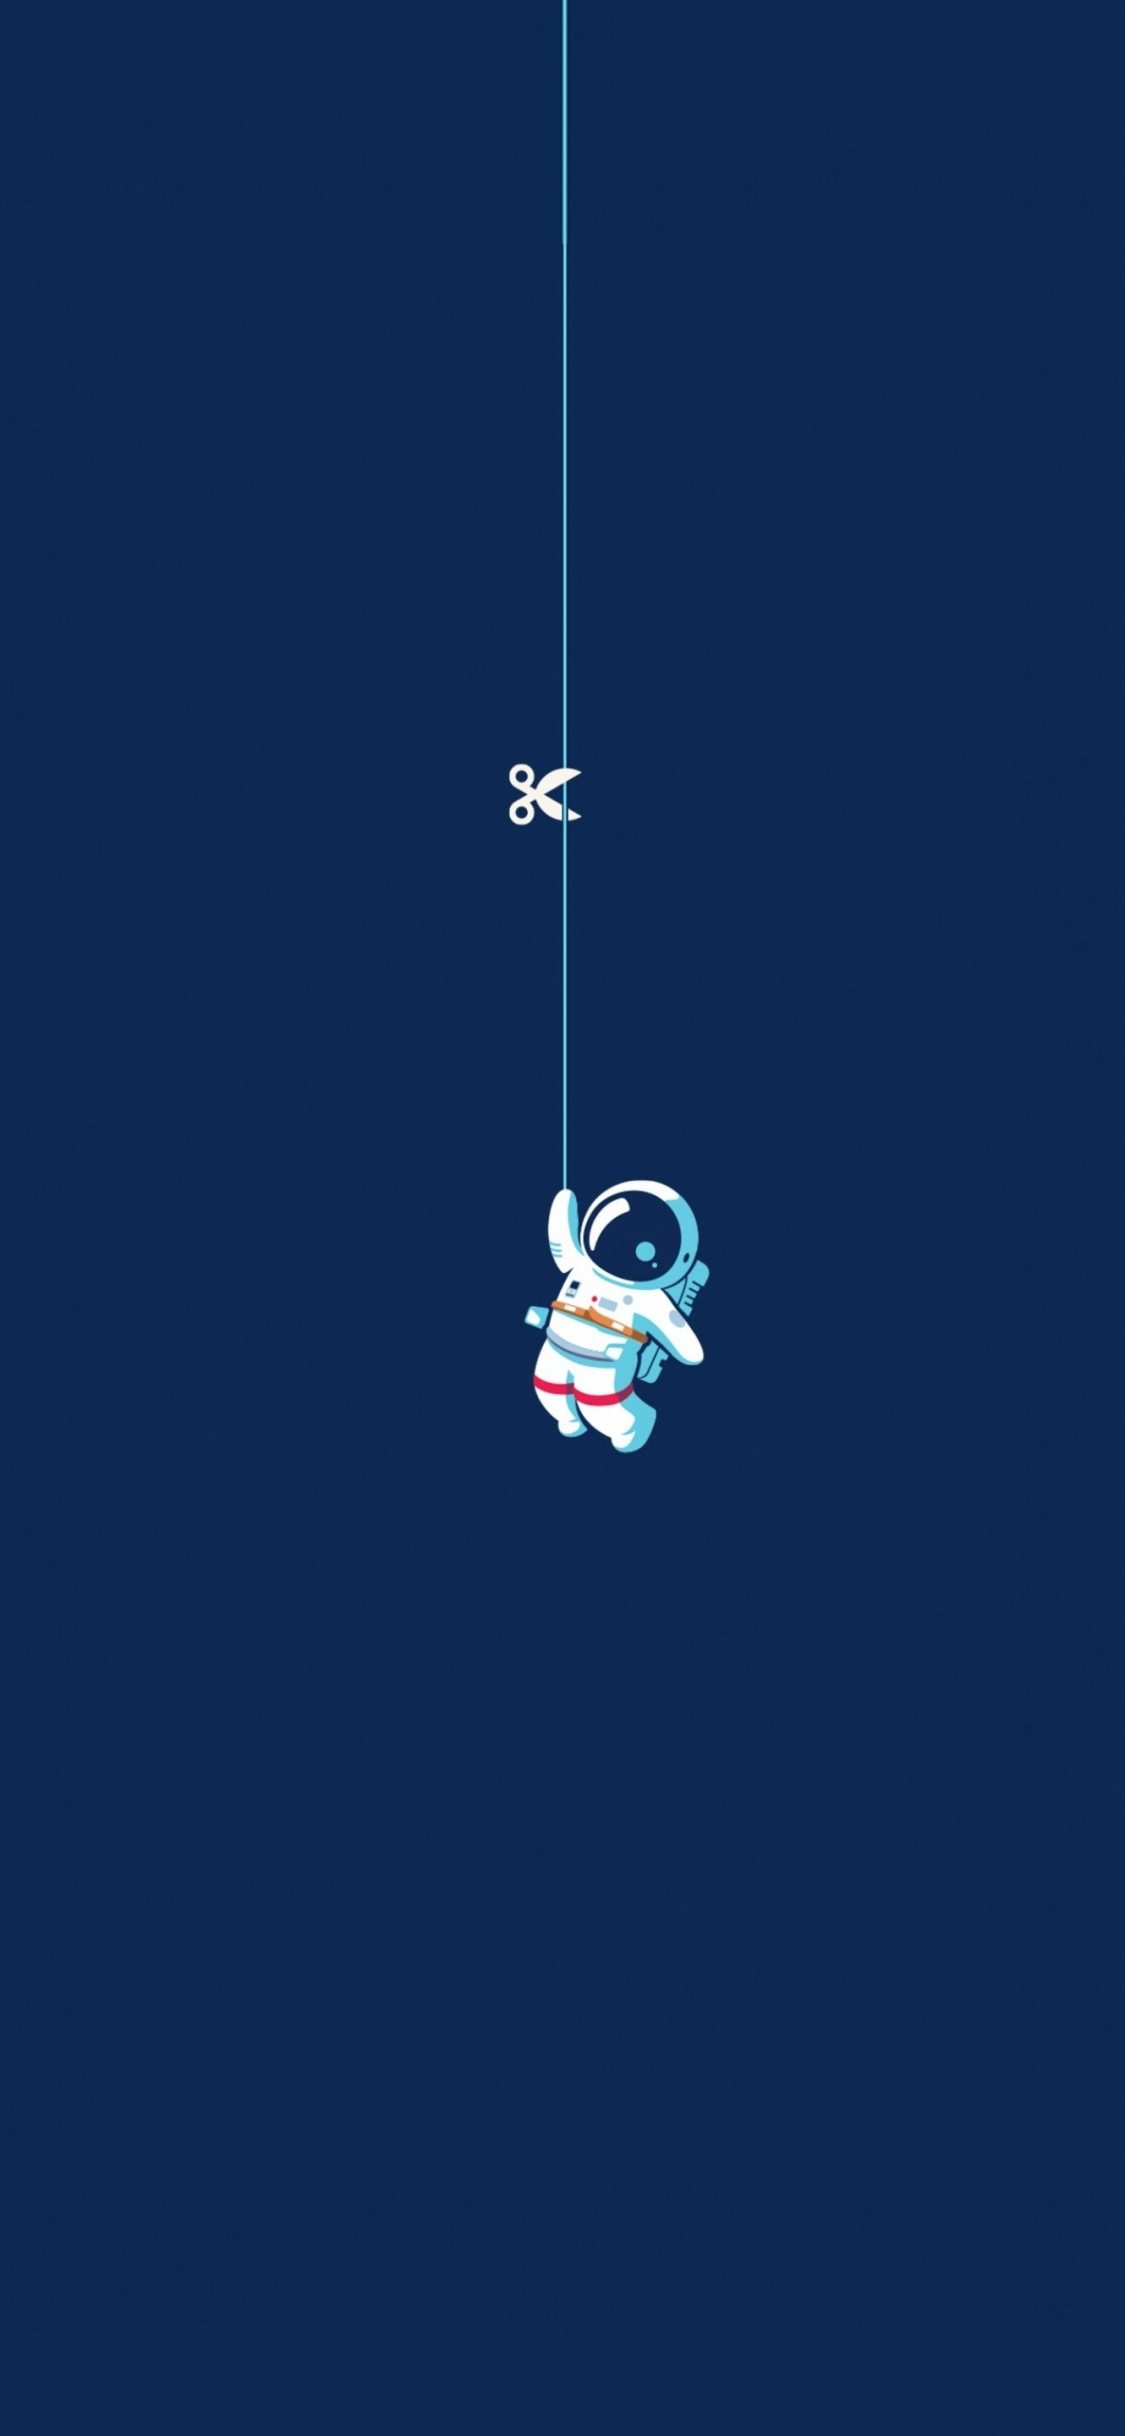 Download wallpaper x astronaut hang minimal iphone x x hd background